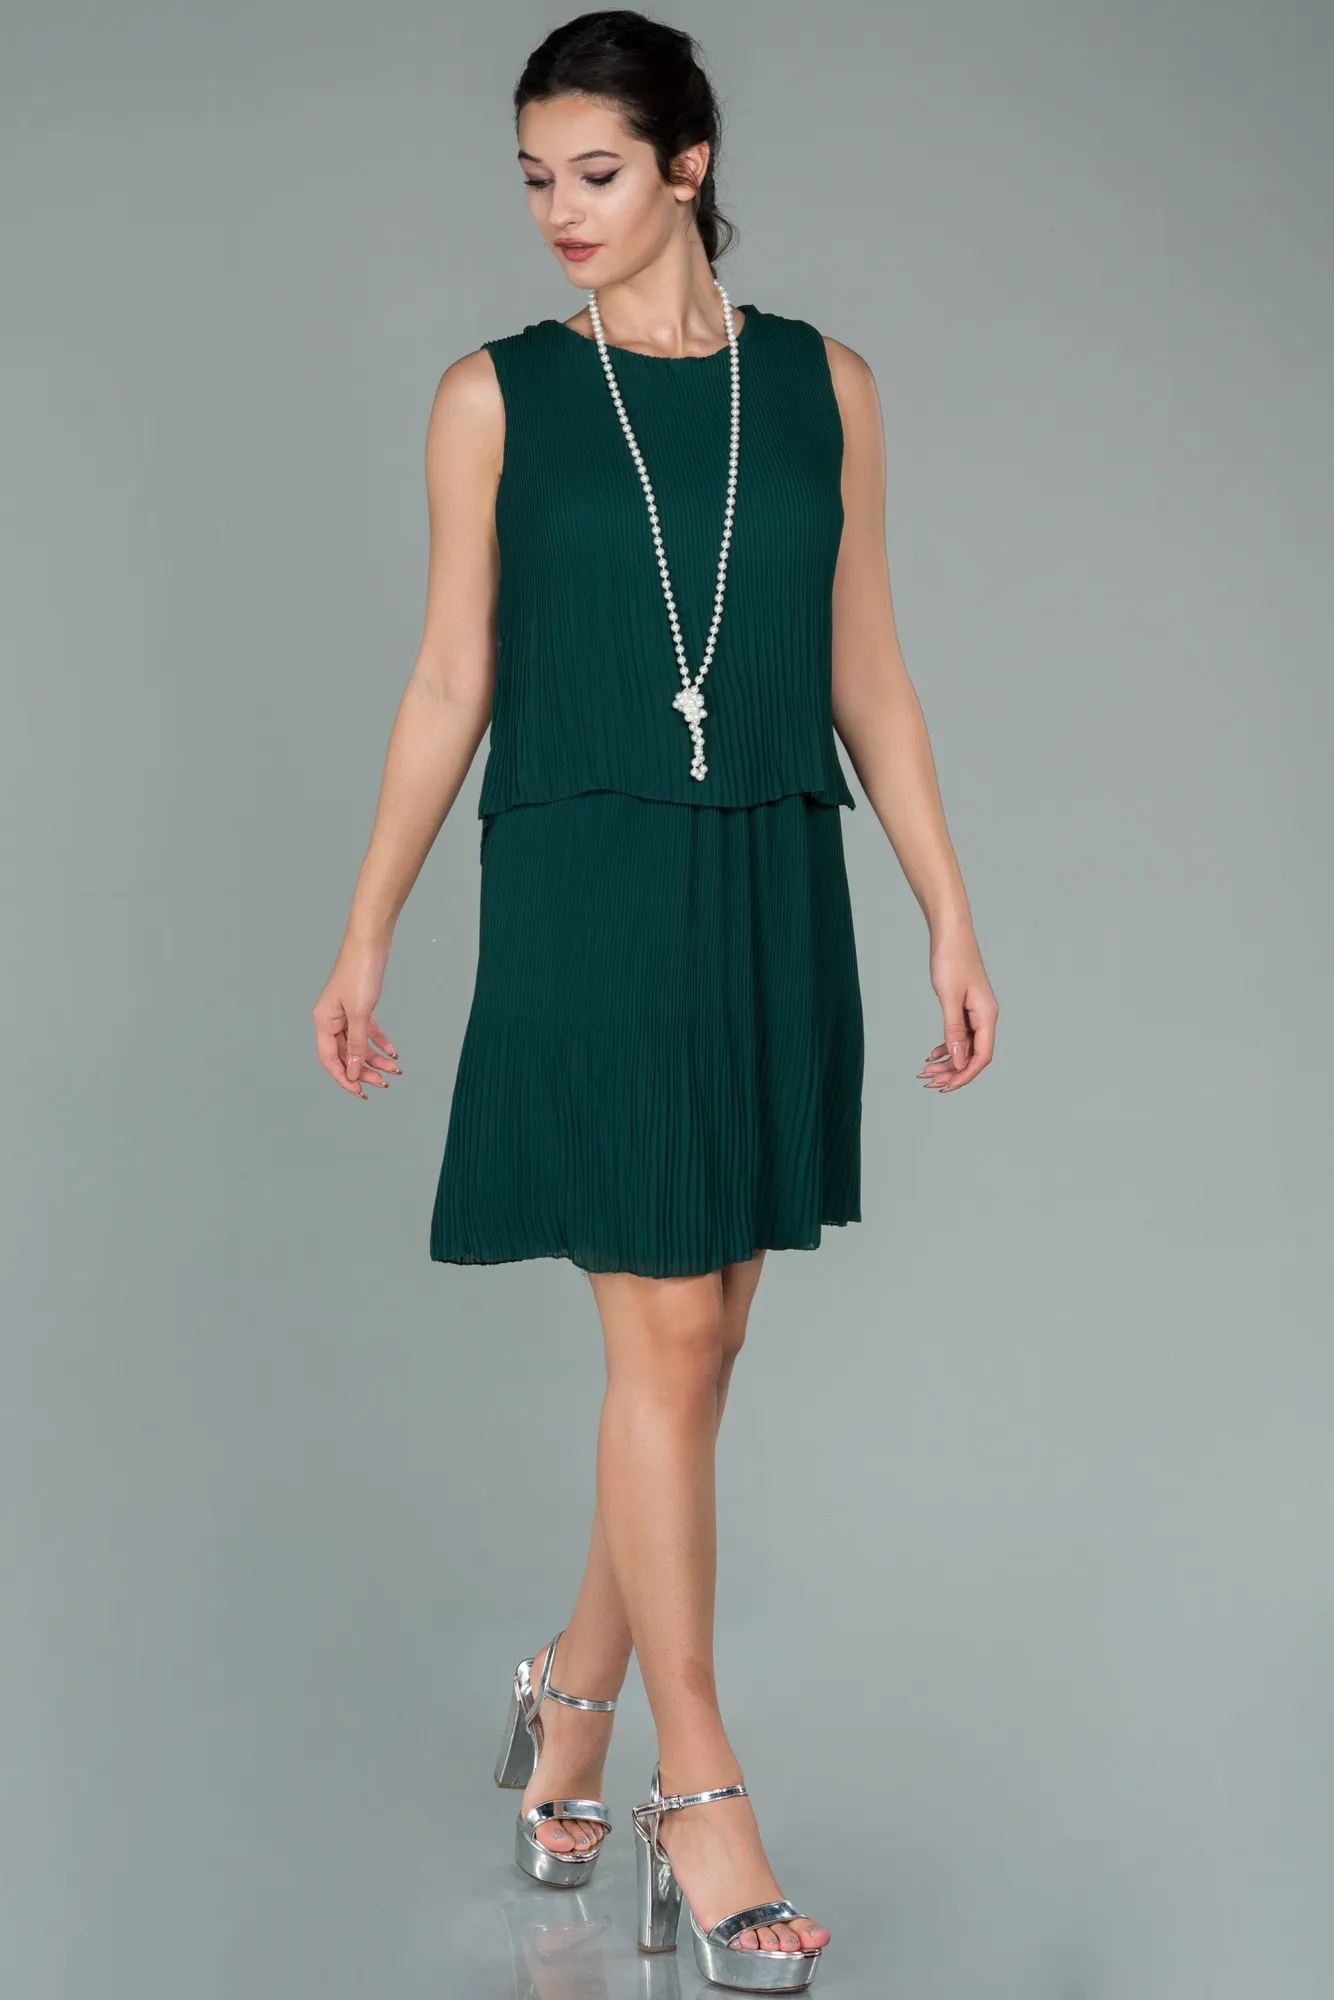 Emerald Green-Short Invitation Dress ABK782